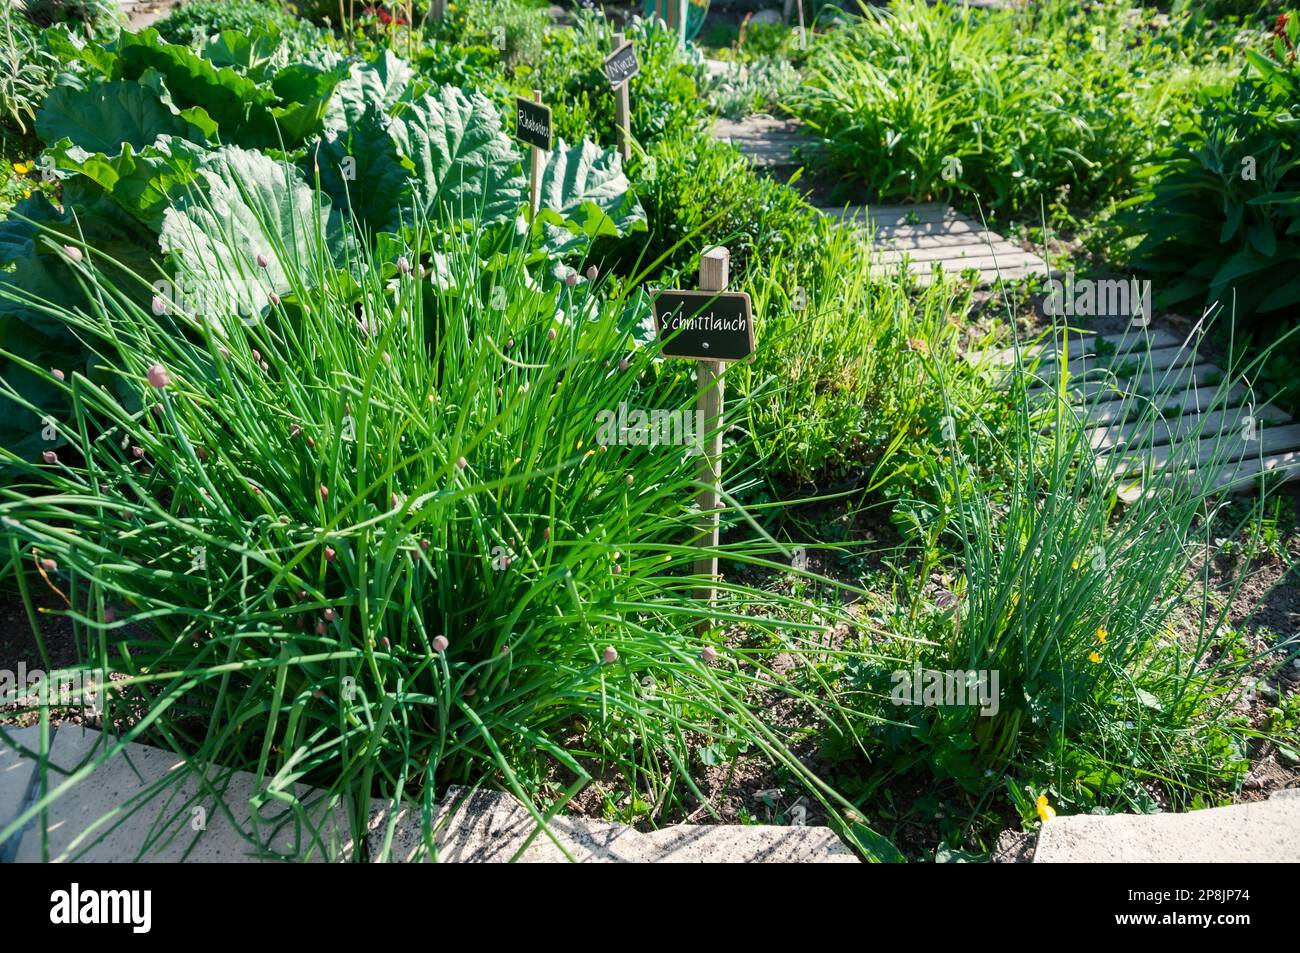 Letto alle erbe con erba cipollina, rabarbaro, salvia, menta e altre erbe da cucina - scritta in tedesco Foto Stock